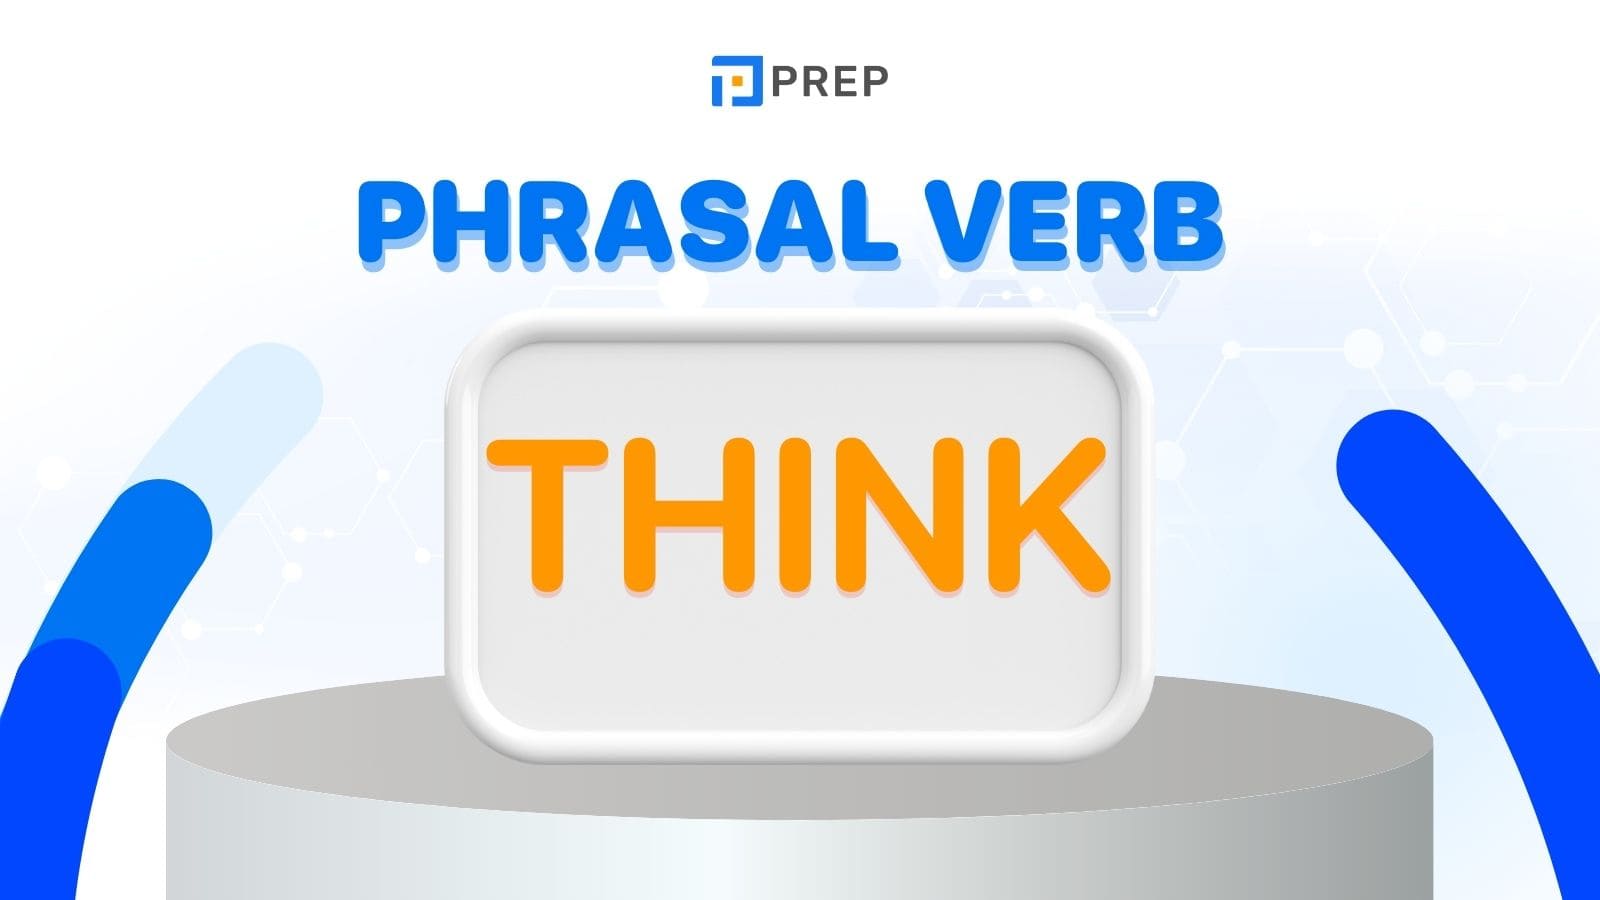 phrasal-verb-think.jpg